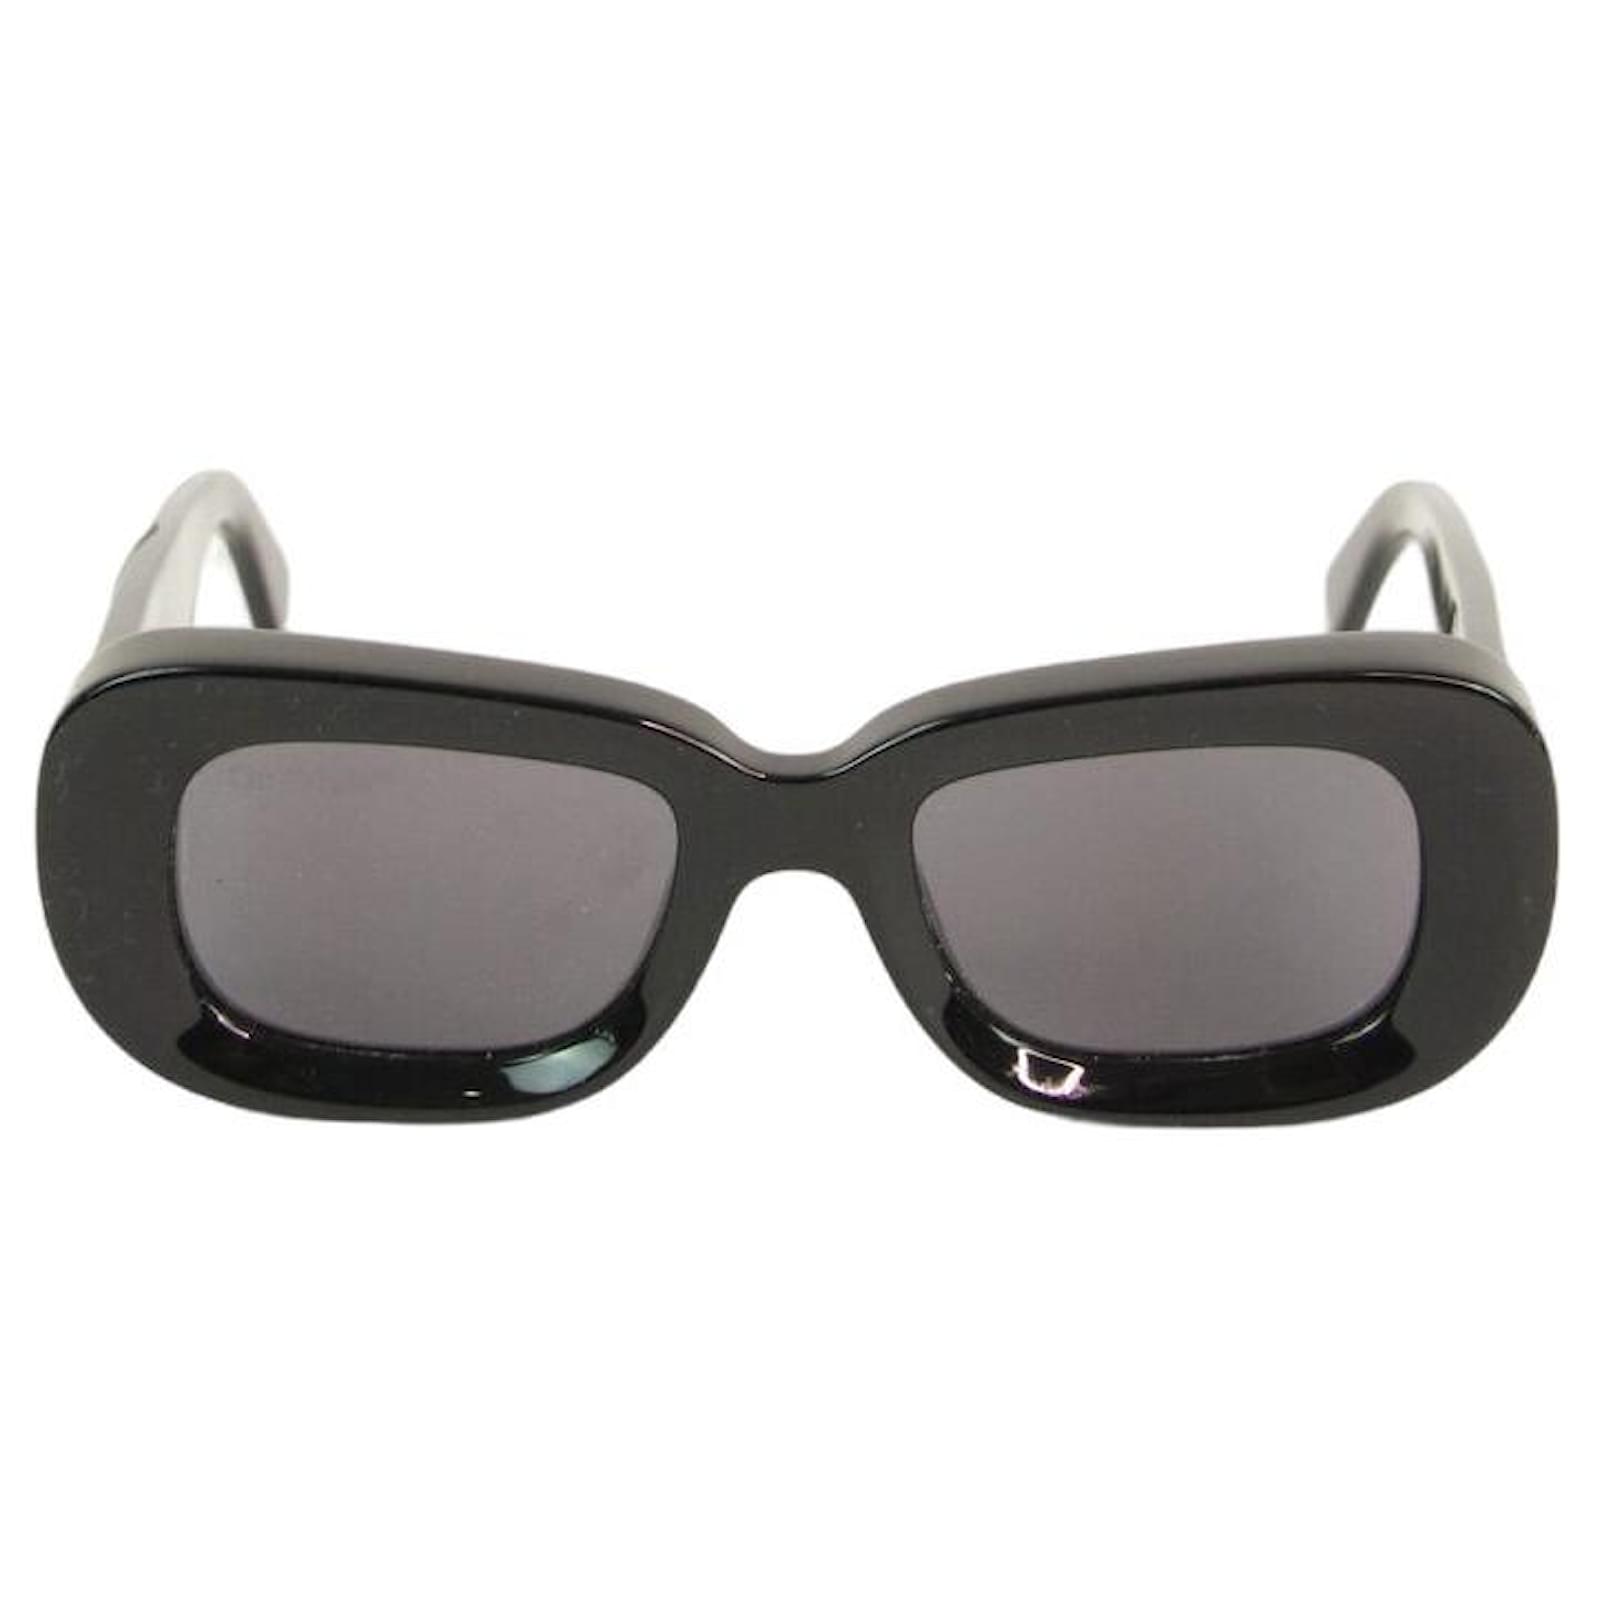 Off-White Plastic Sunglasses for Women